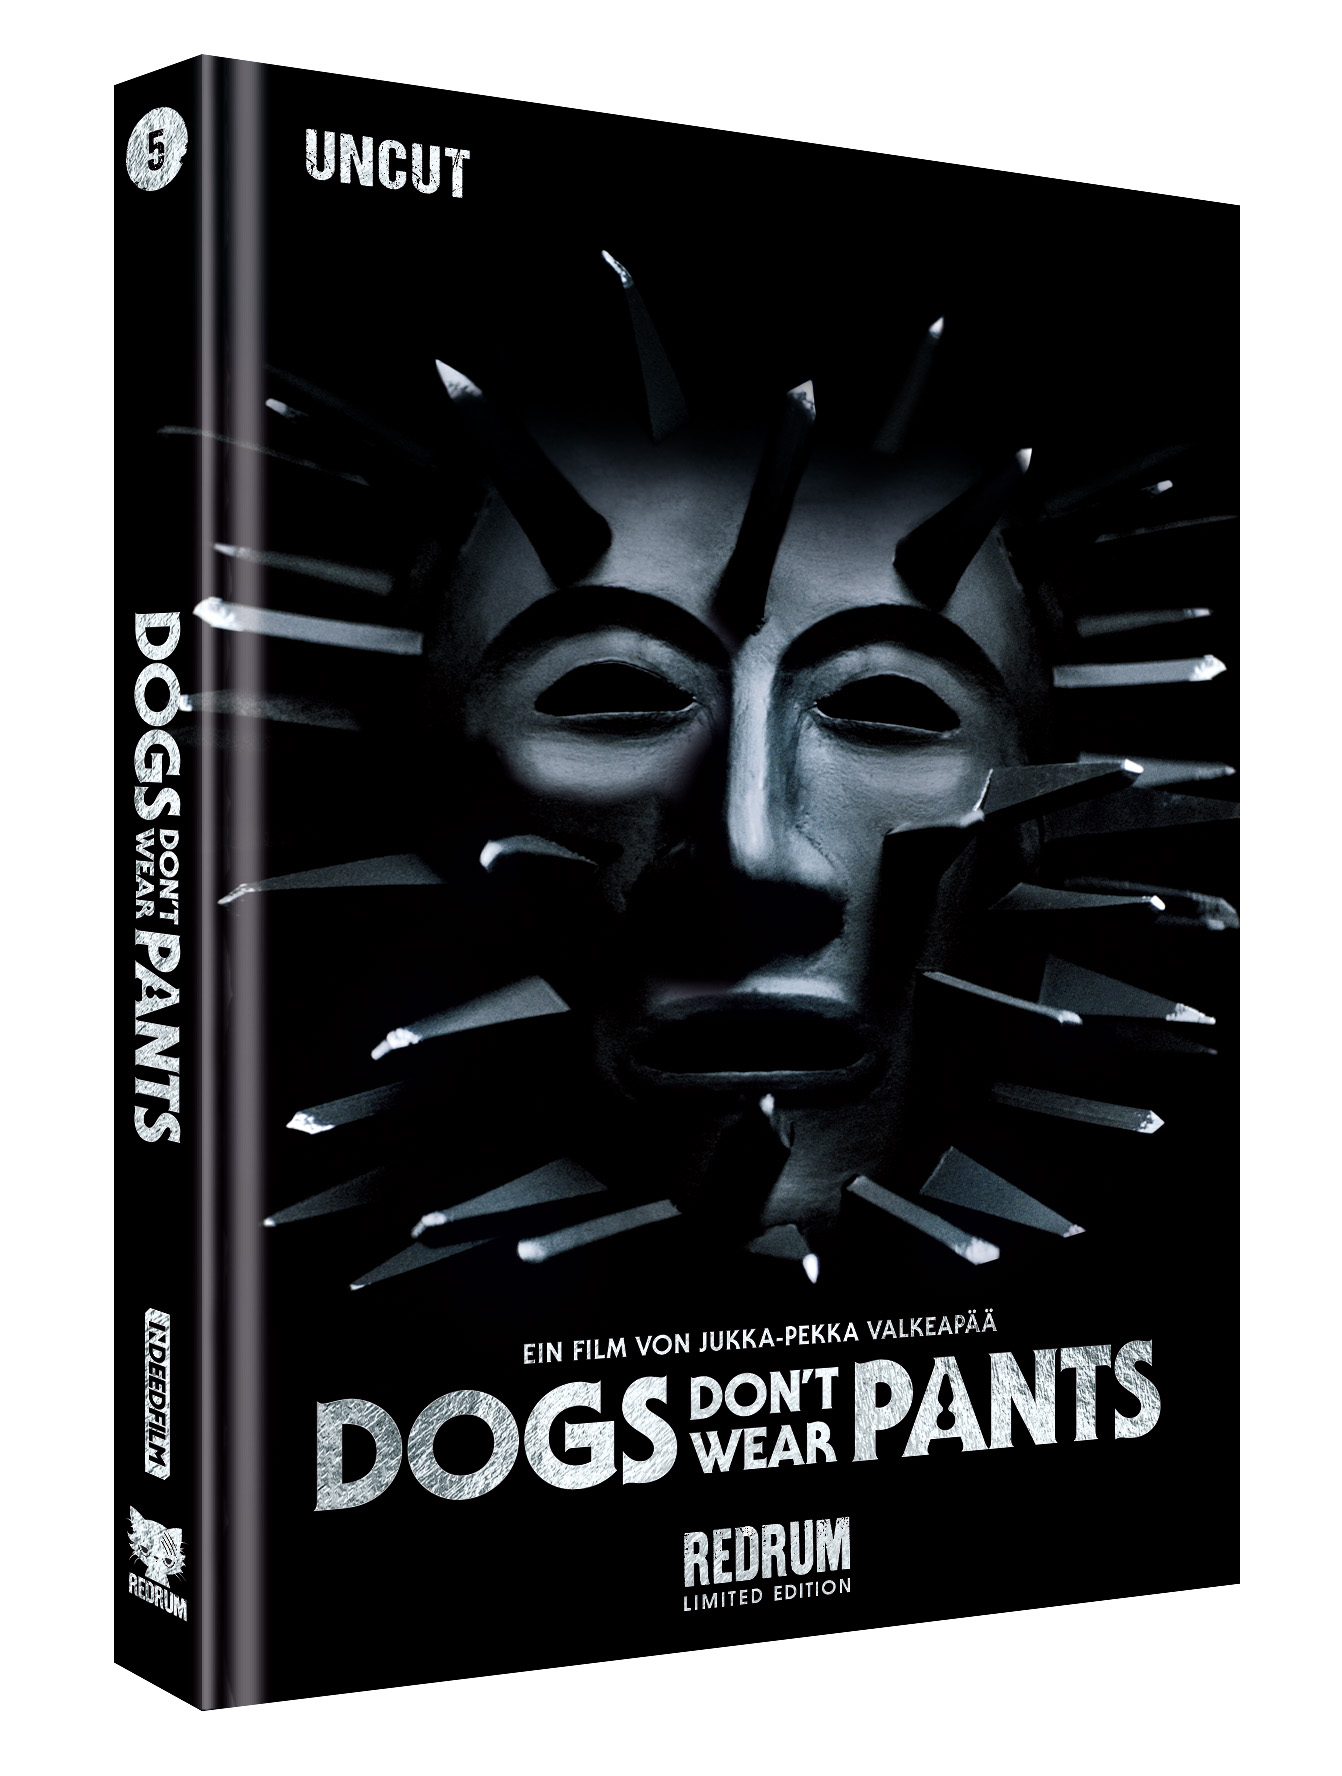 Dogs Don'T Wear Pants (Uncut) - Cover A - Redrum 2-Disc Limited Collector's  Edition IN Mediabook (Blu-Ray & DVD): Amazon.co.uk: Kosonen, Krista,  Strang, Pekka, Valkeapää, J-P: DVD & Blu-ray